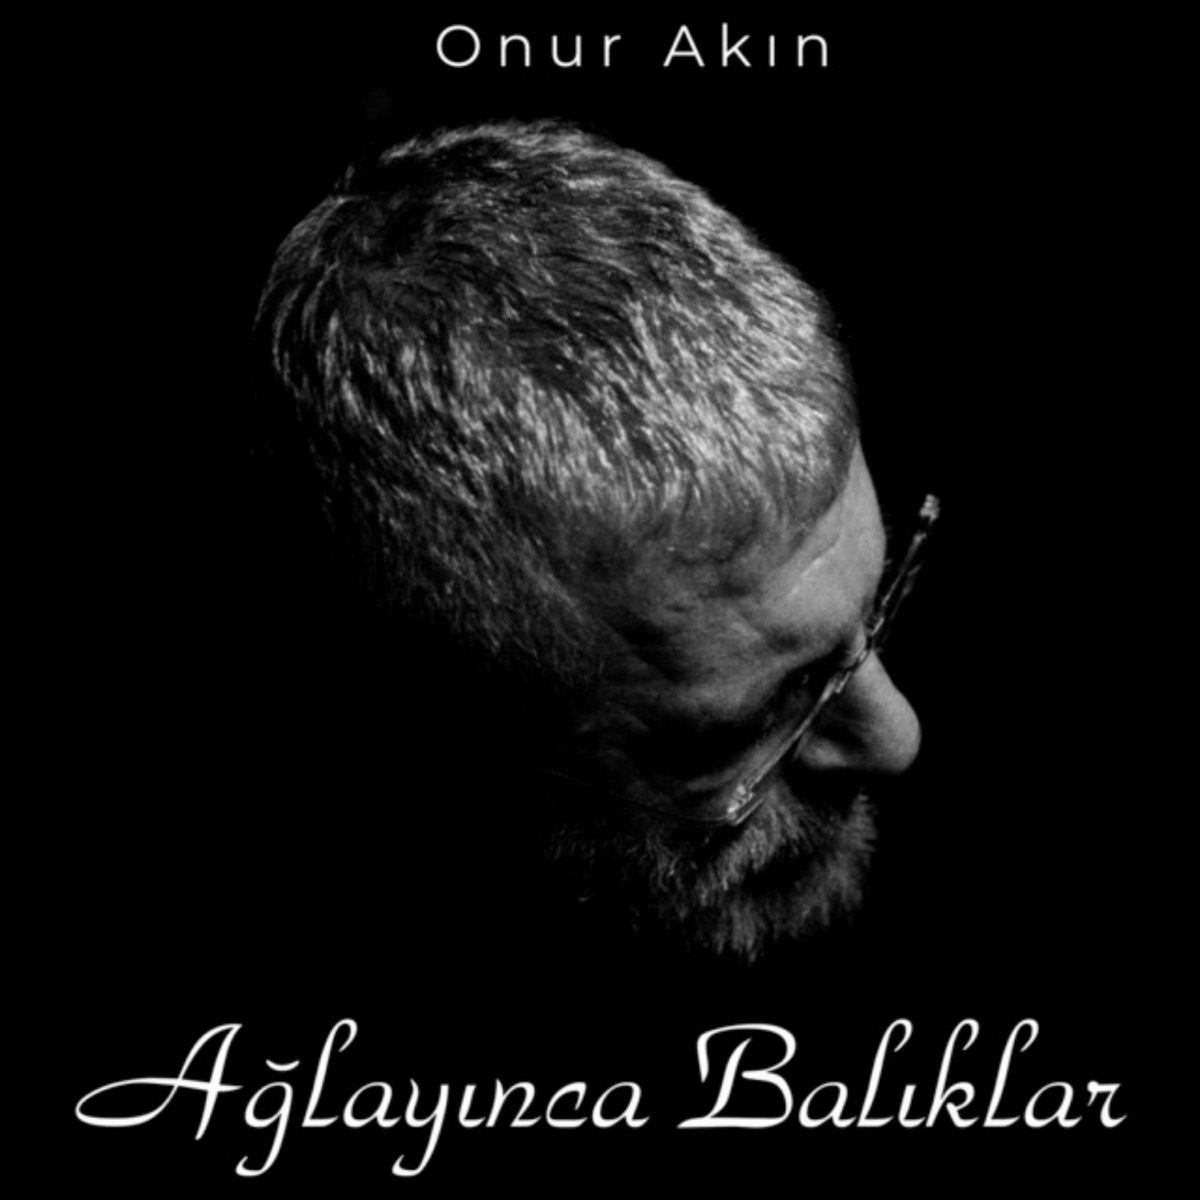 Memleket İsterim - Album by Onur Akın - Apple Music